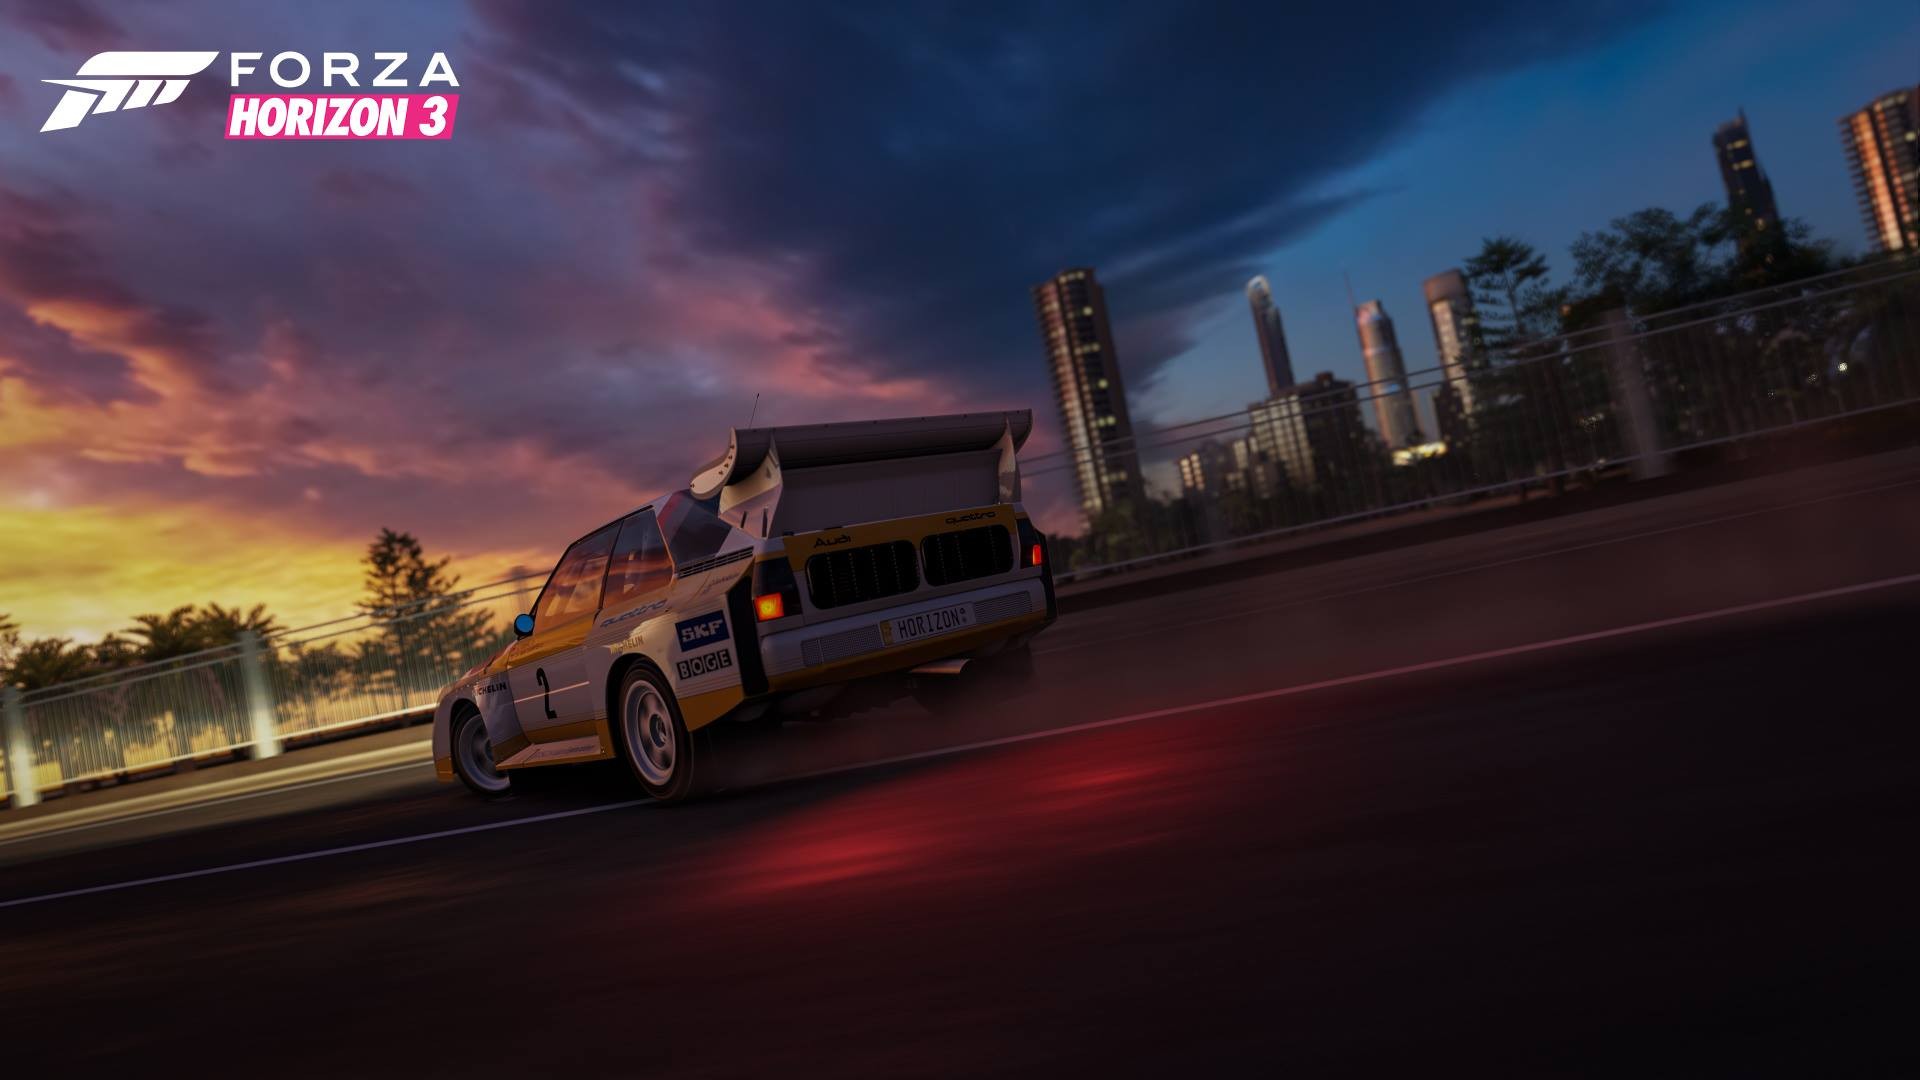 General 1920x1080 Forza Forza Horizon 3 racing car Turn 10 Studios vehicle video games